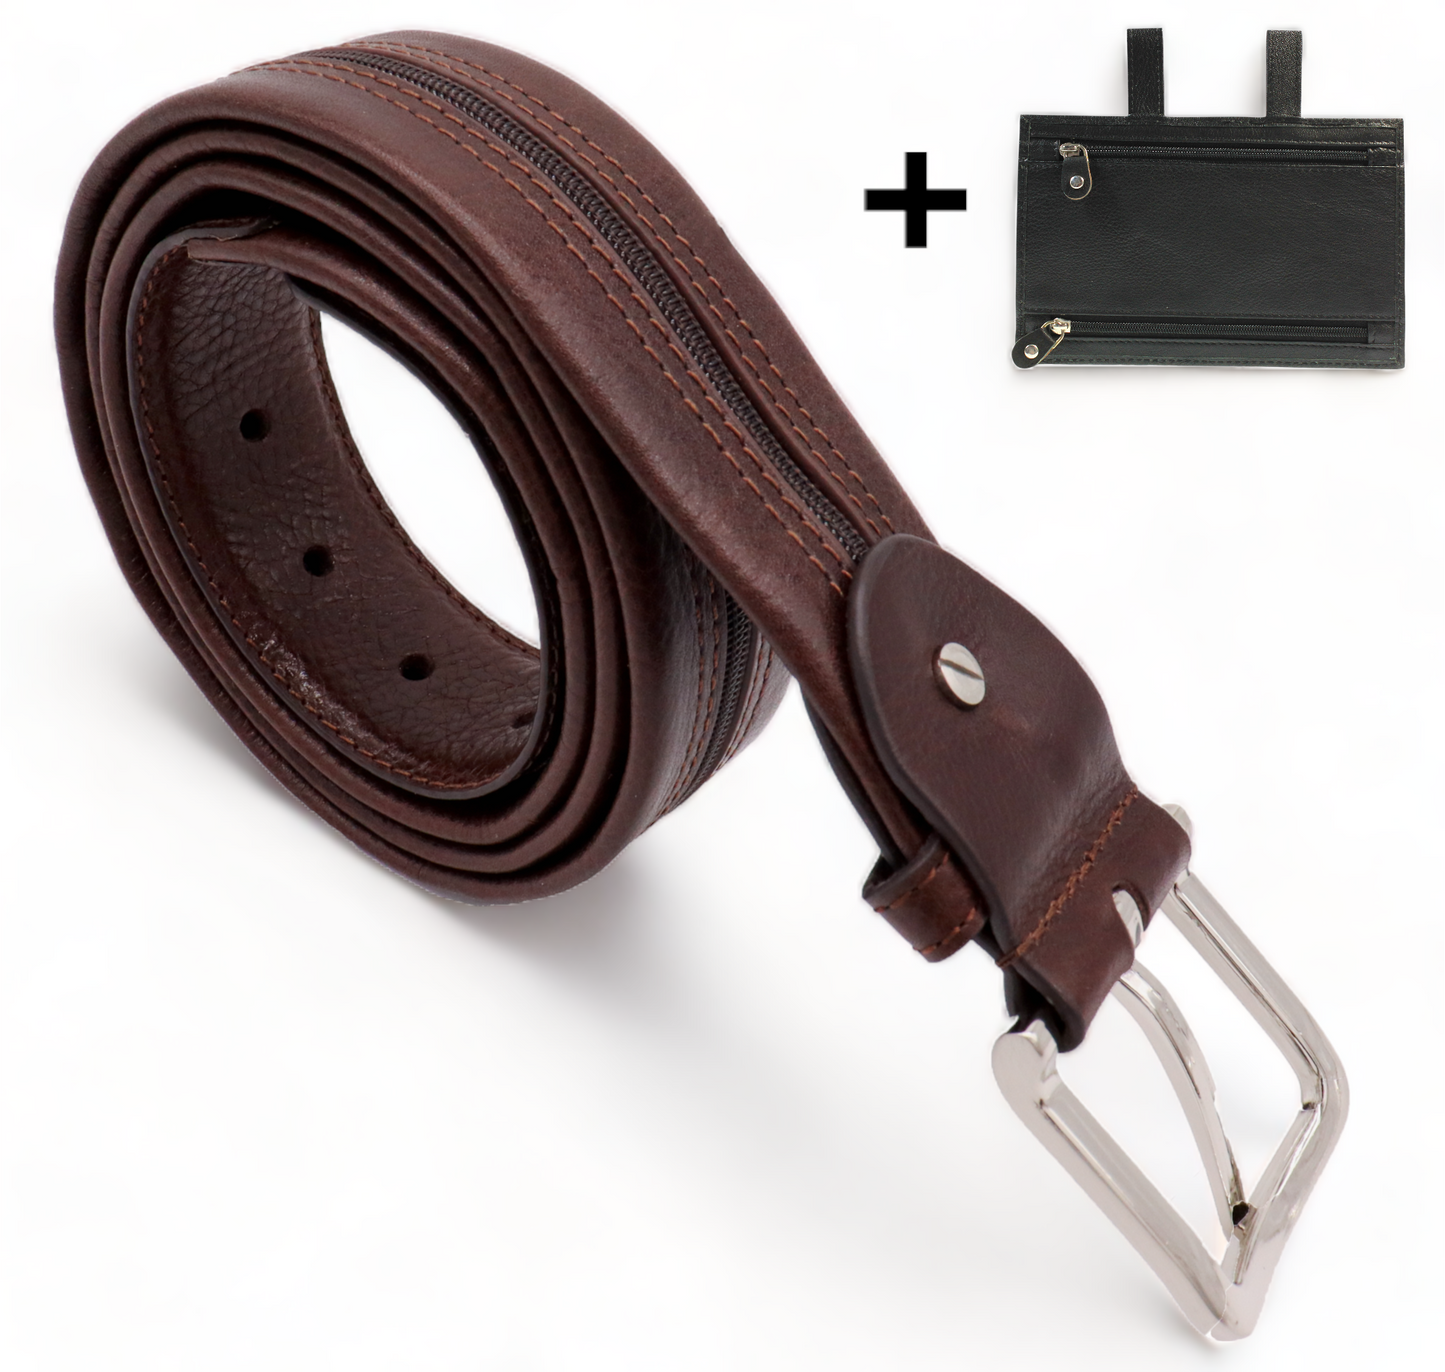 Safekeepers Moneybelt - Black - Travel Belt Leather - Money belt with zipper